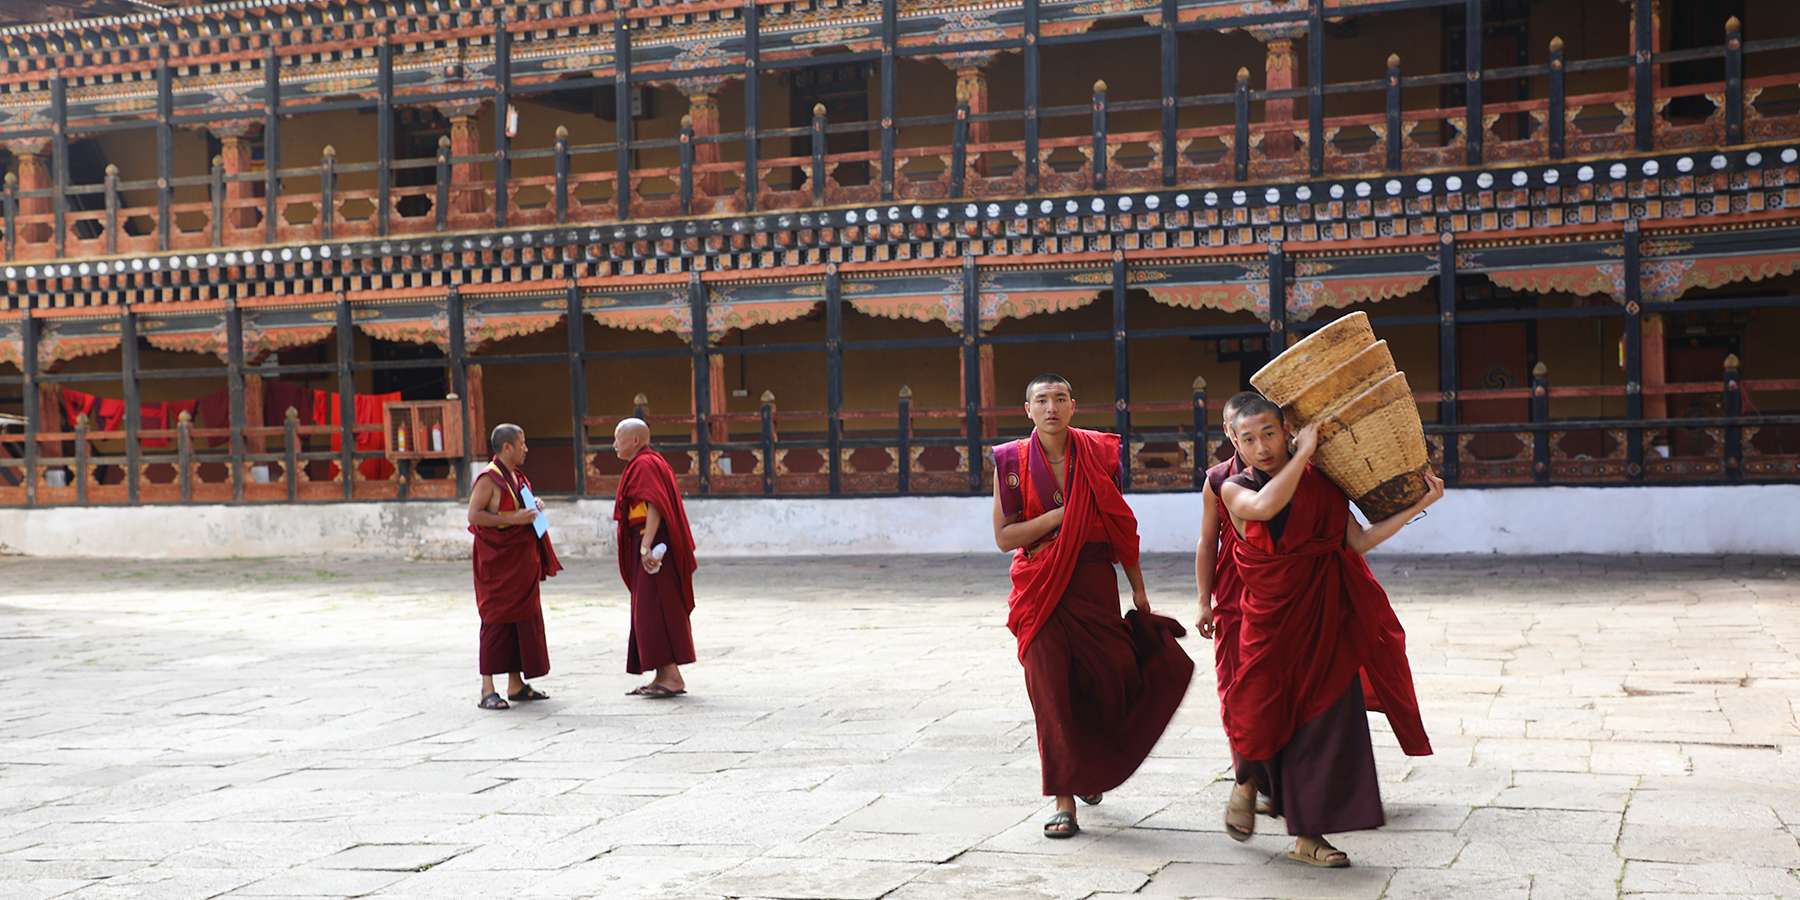 Travel to Bhutan with Go Bhutan tours